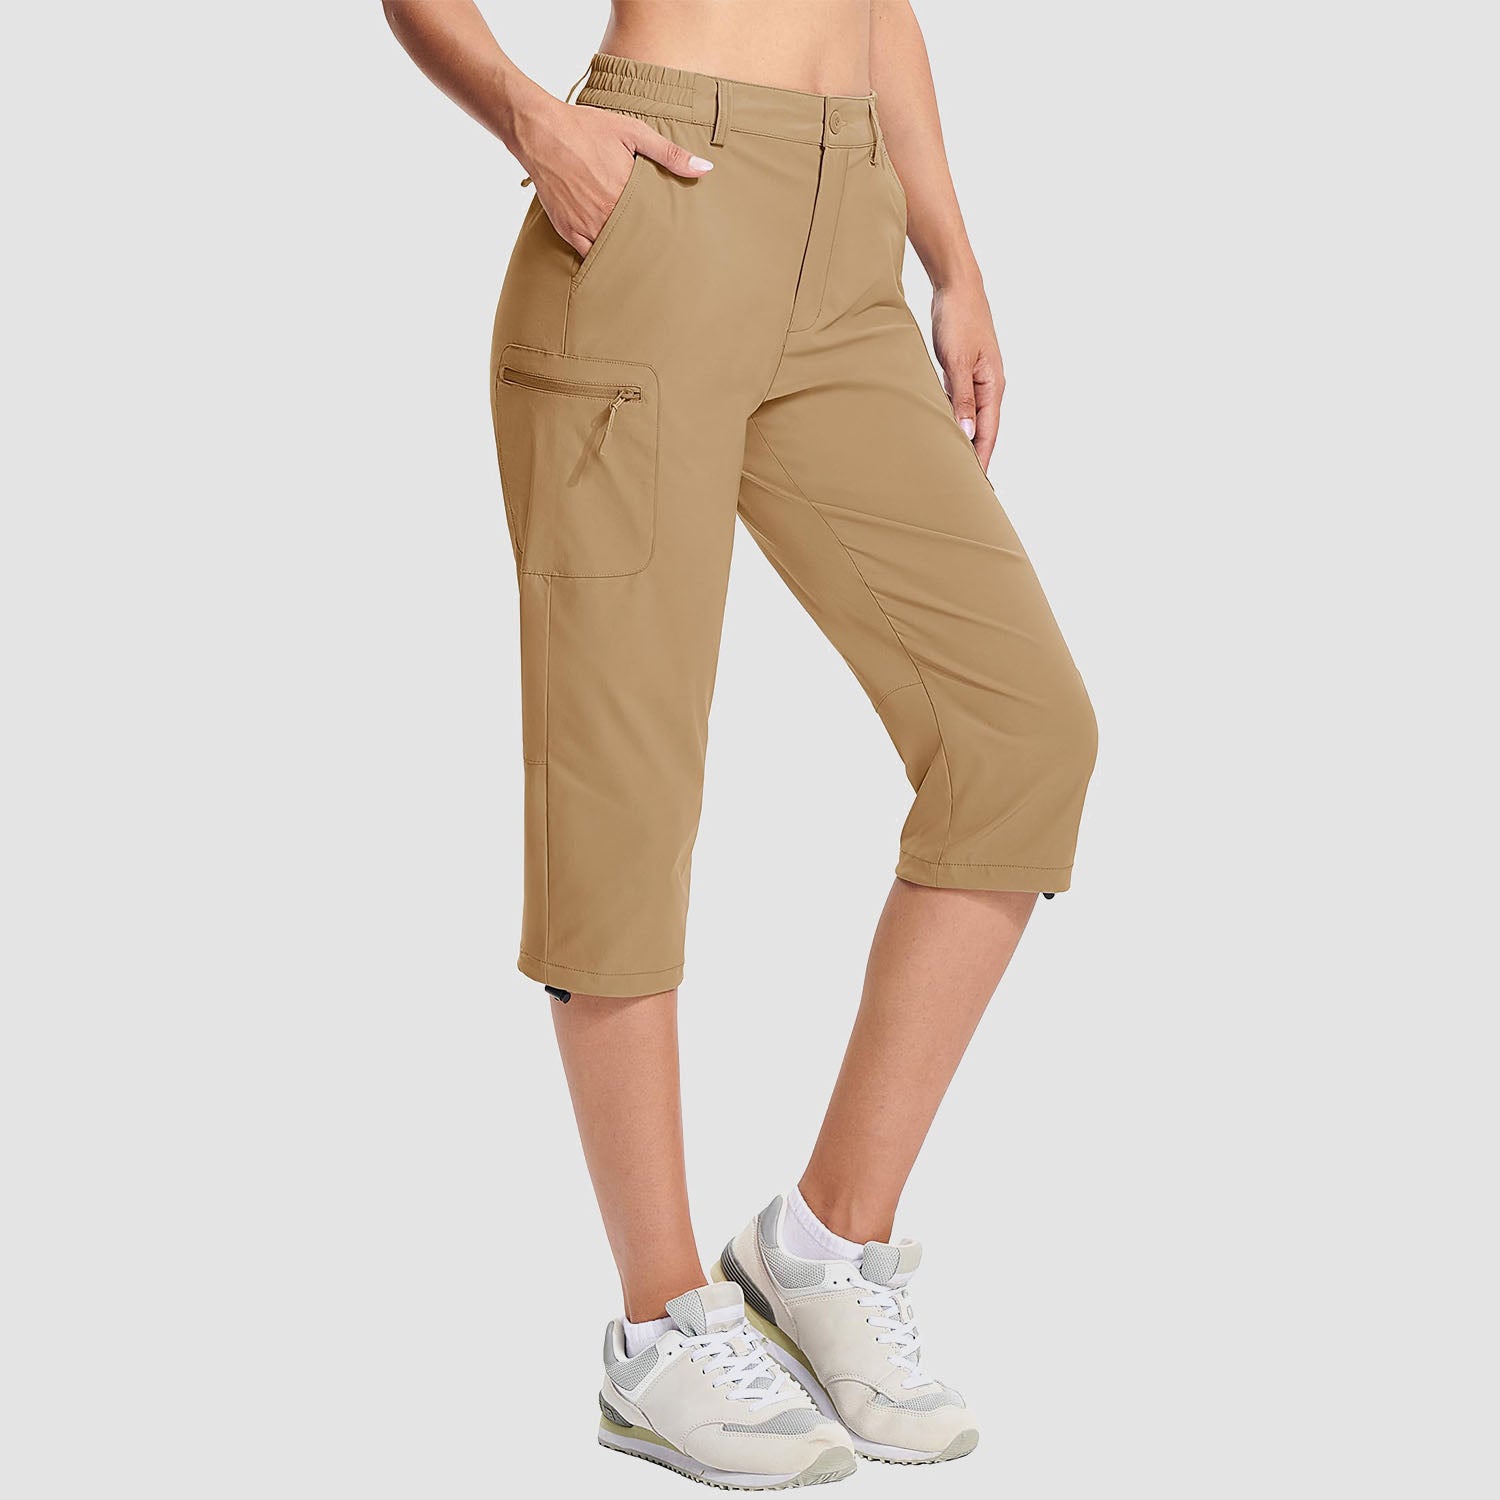 Women's Stretch Cargo Shorts Capri Hiking Cropped Pants